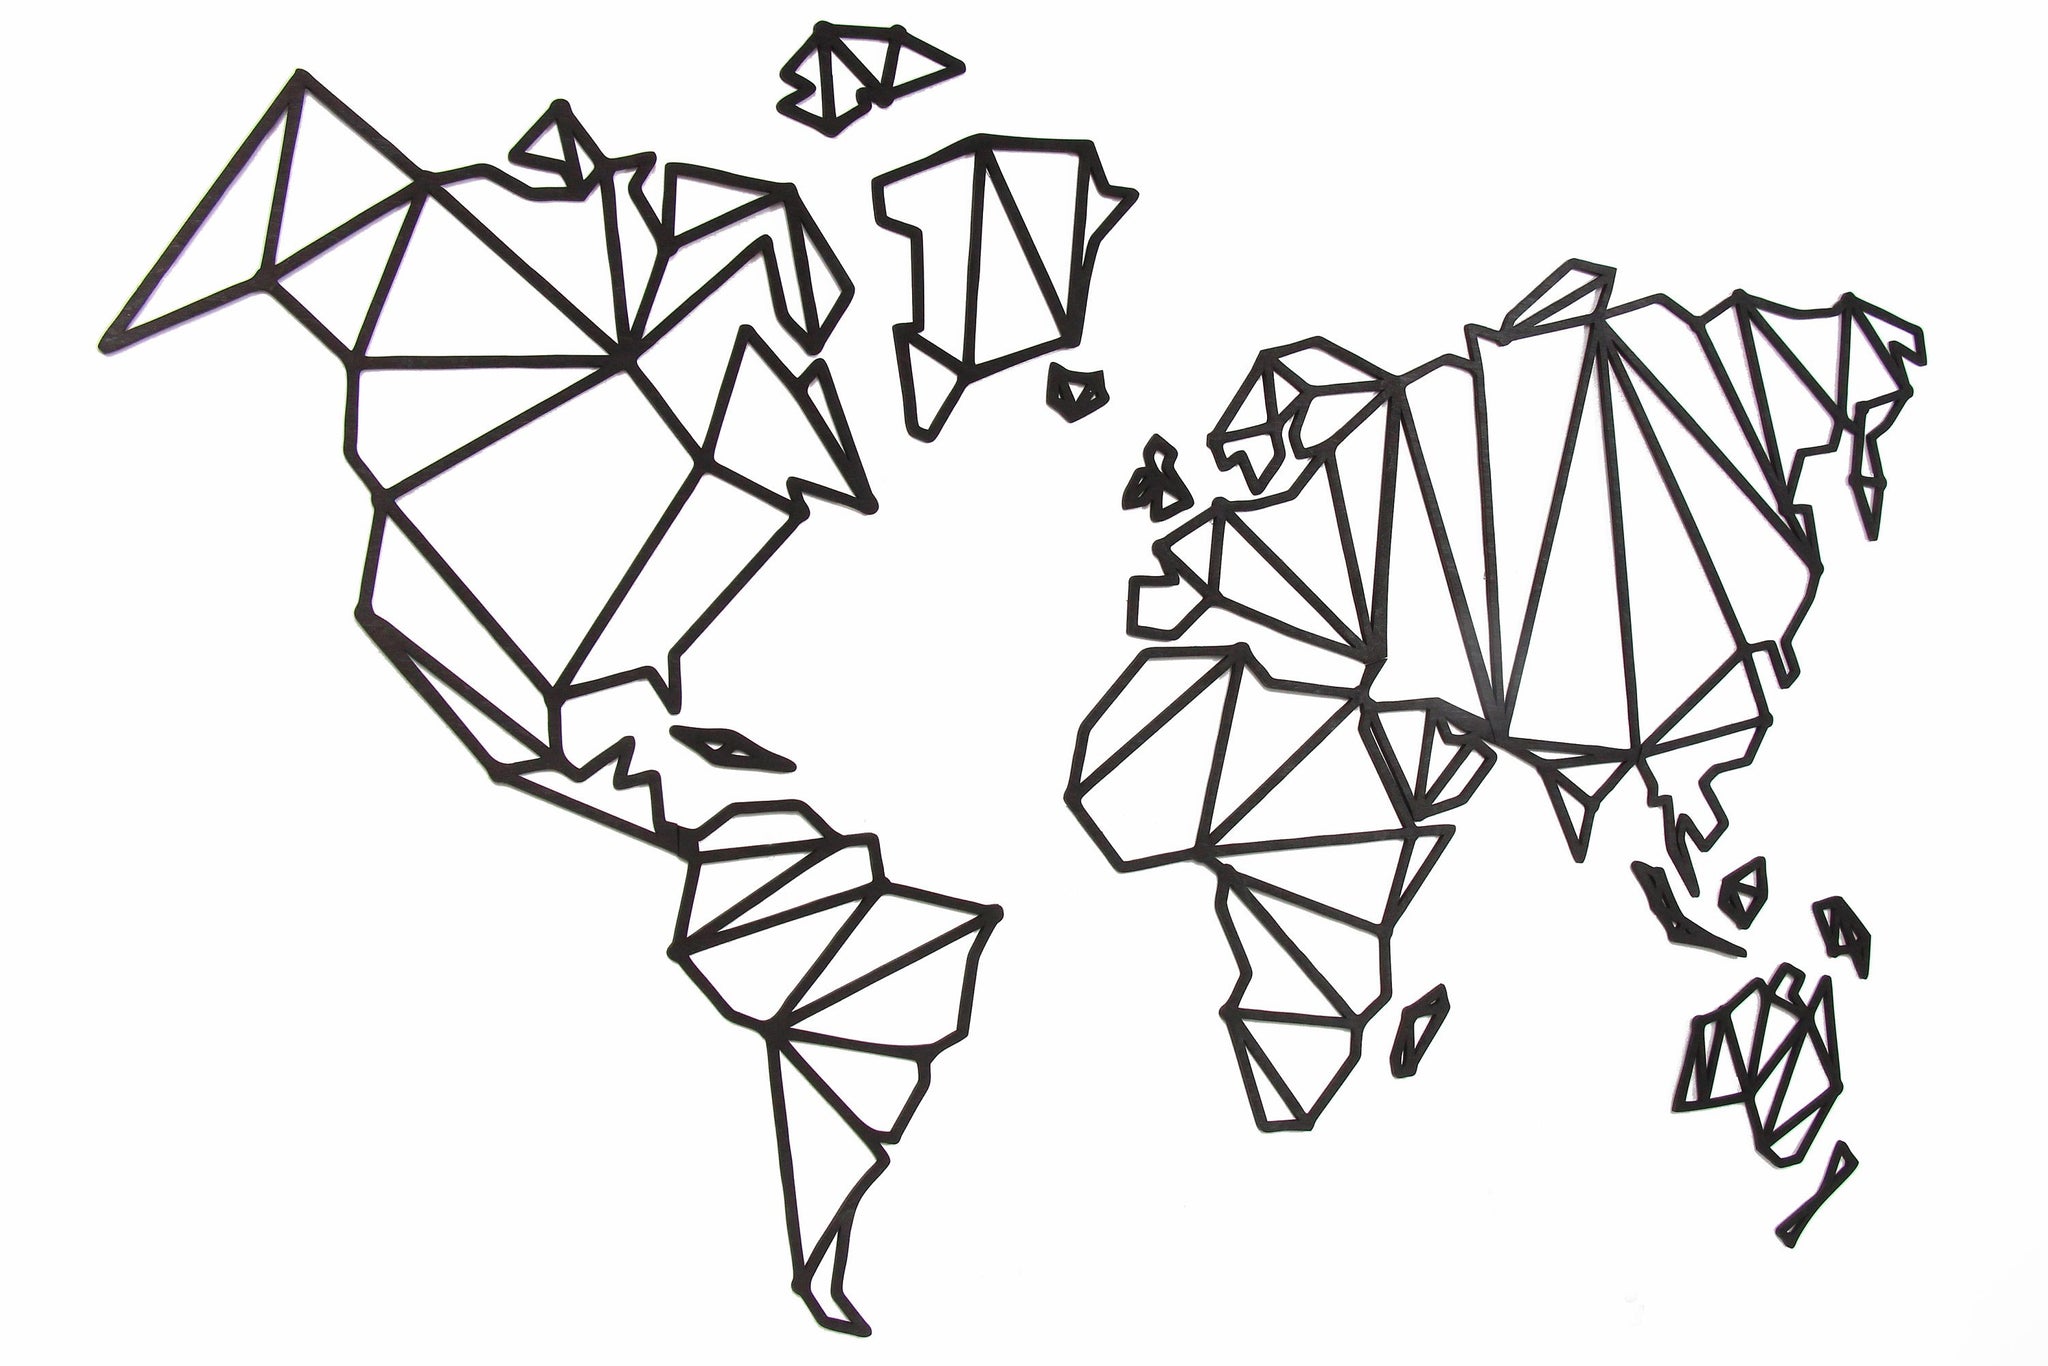 wooden world map pattern